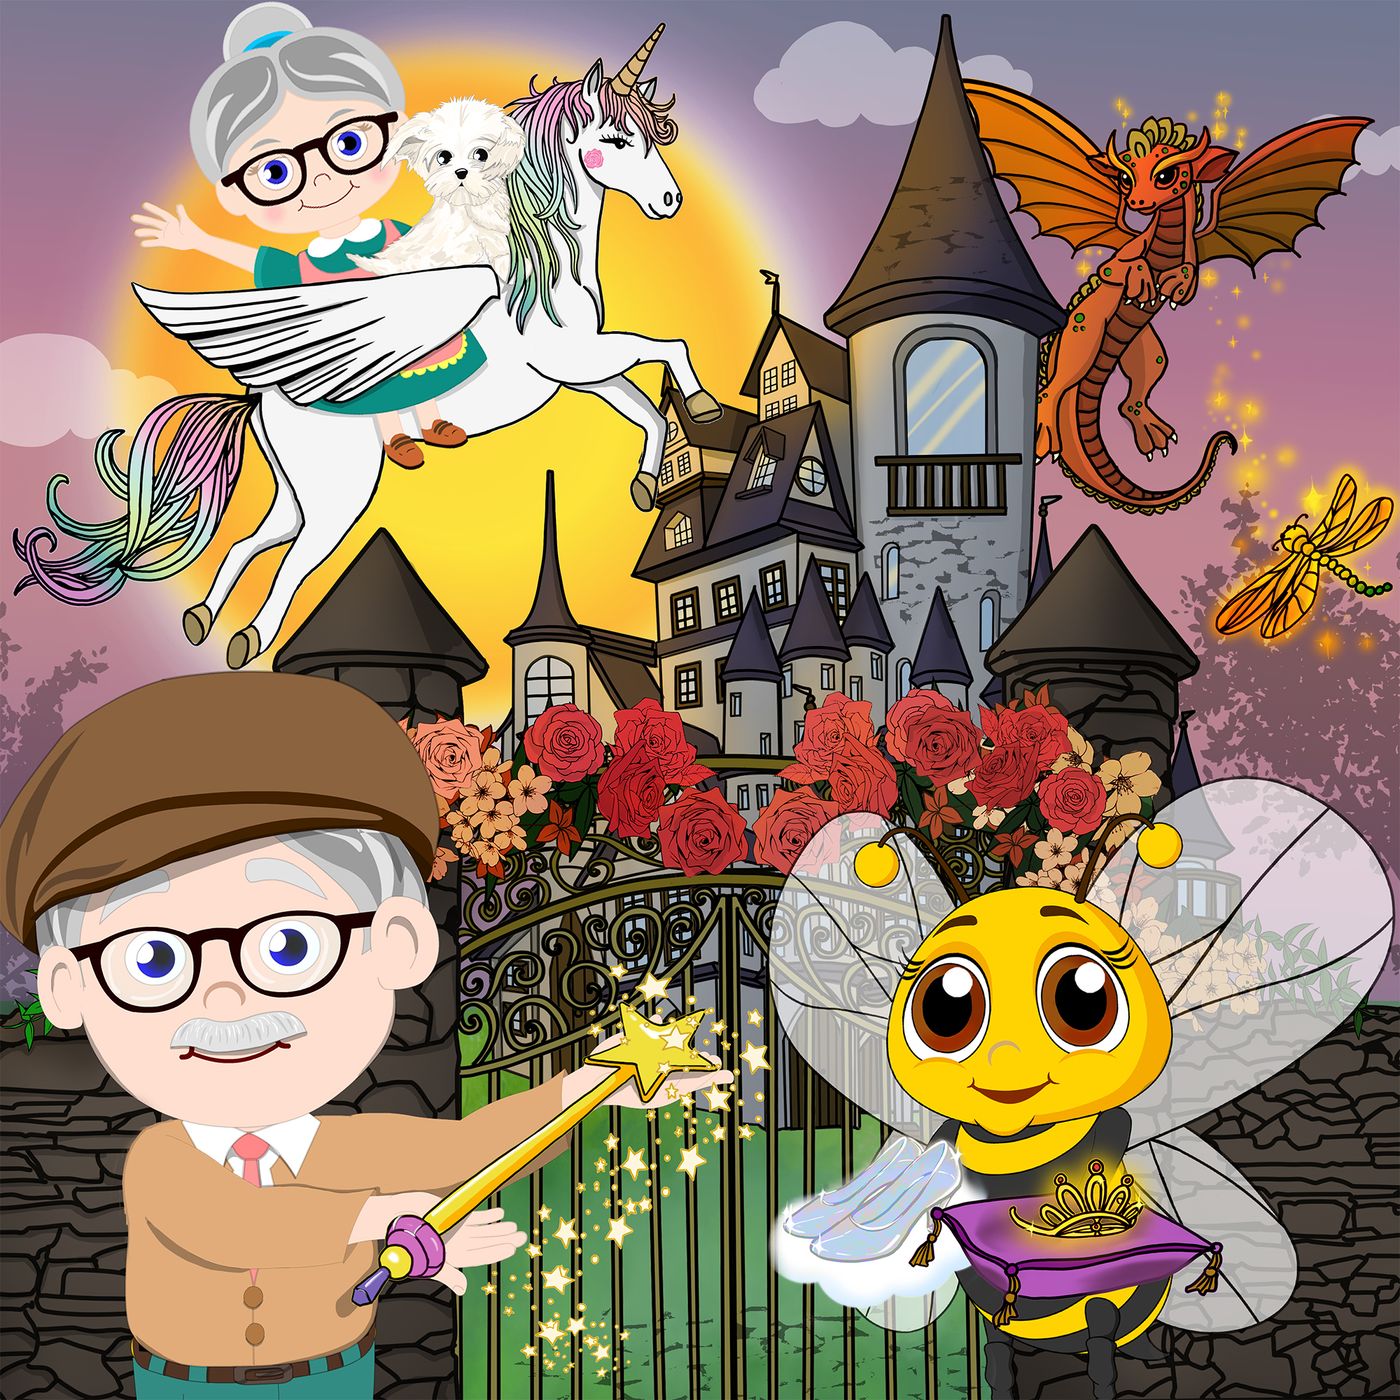 Ep. 1 - Honeybee Princess Academy (Bedtime Story)